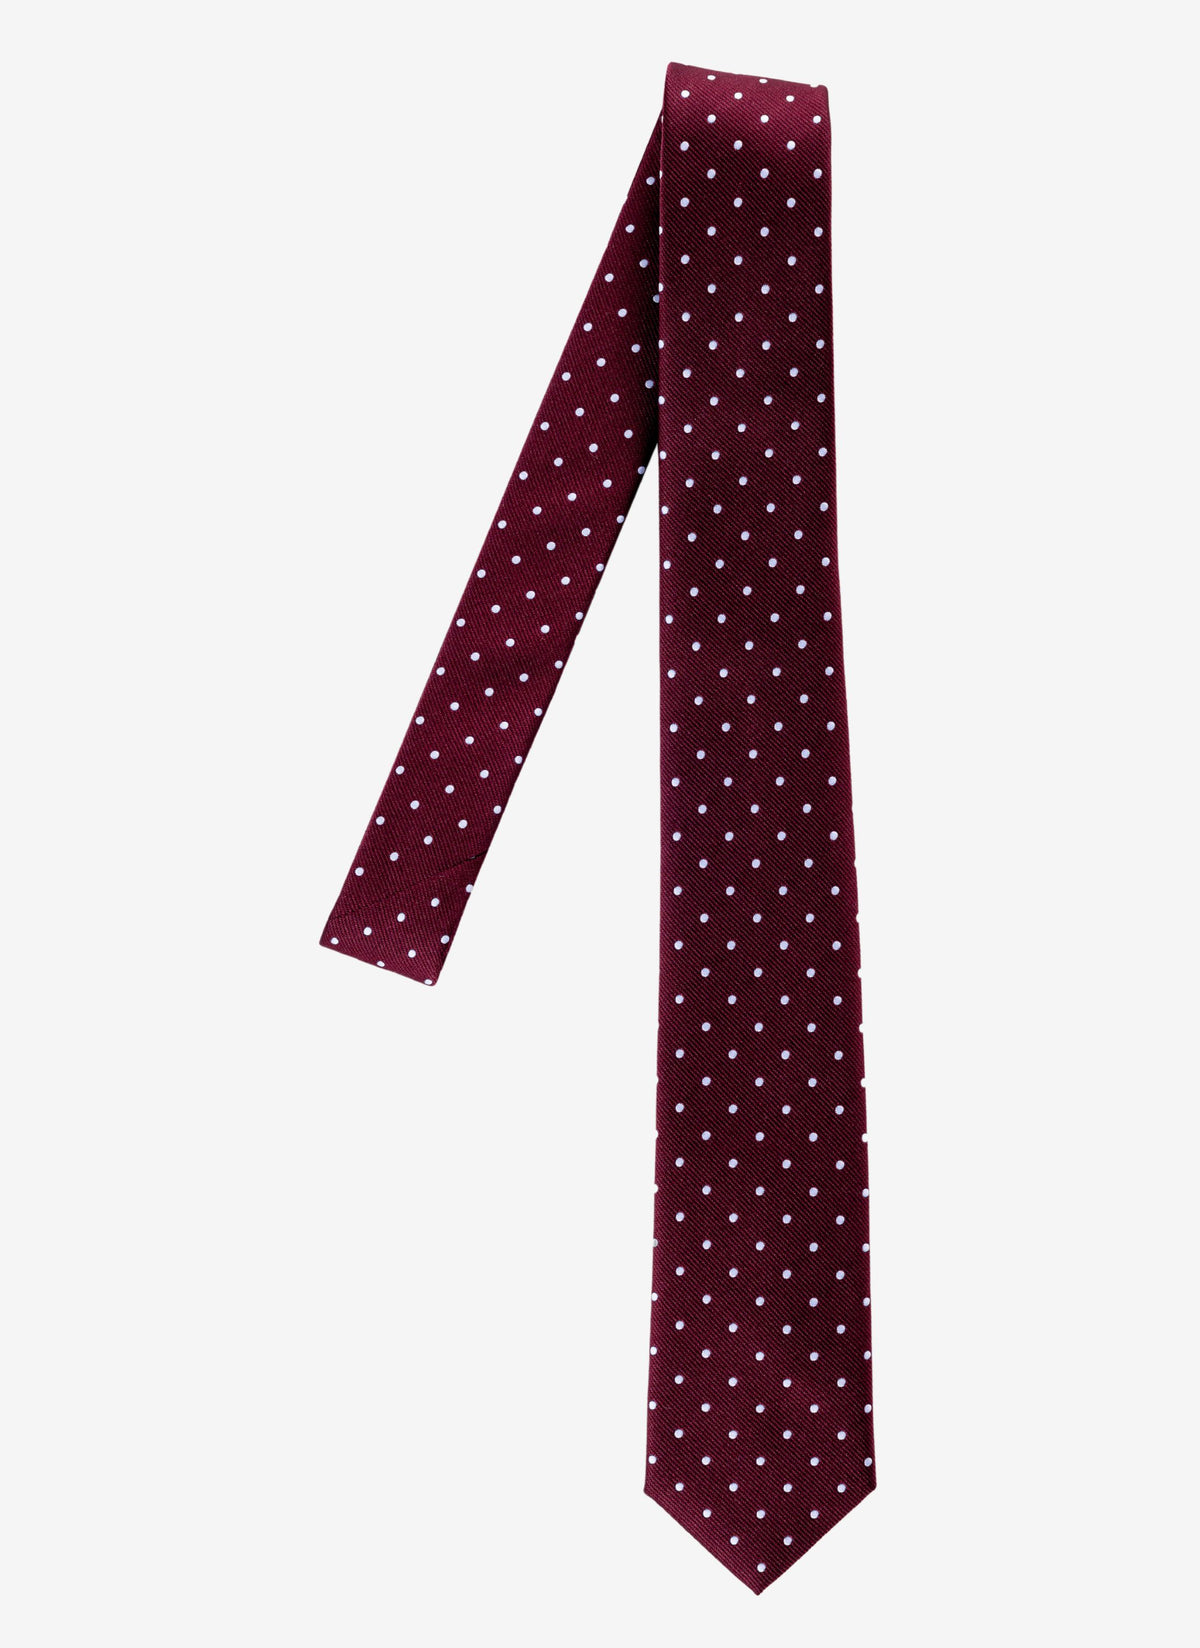 Elegante Krawatte in bordeaux mit weissen Punkten.